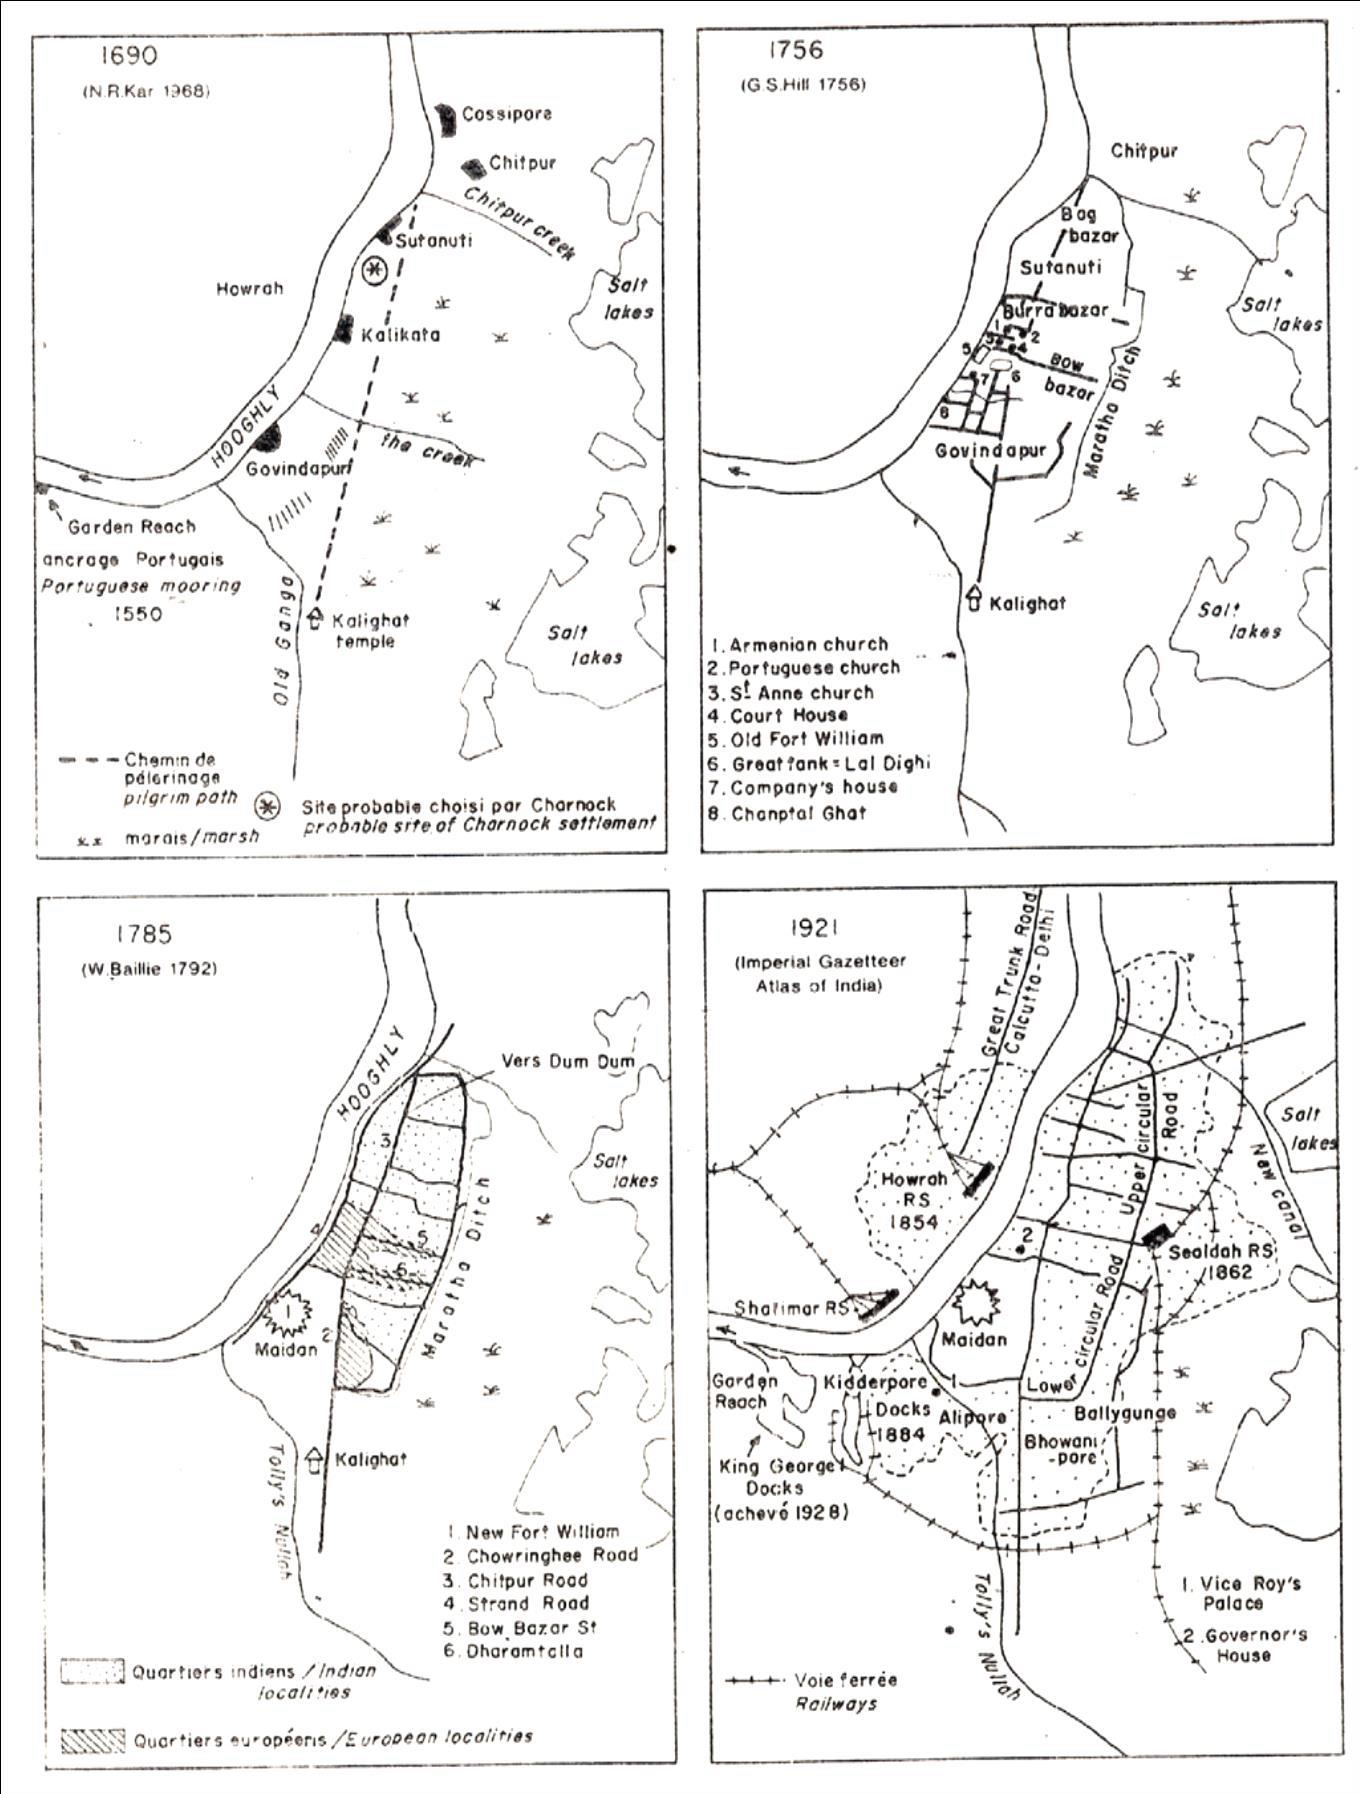 The gradual move of Kolkata towards its eastern wetlands. (Source : Munsi, 1990)